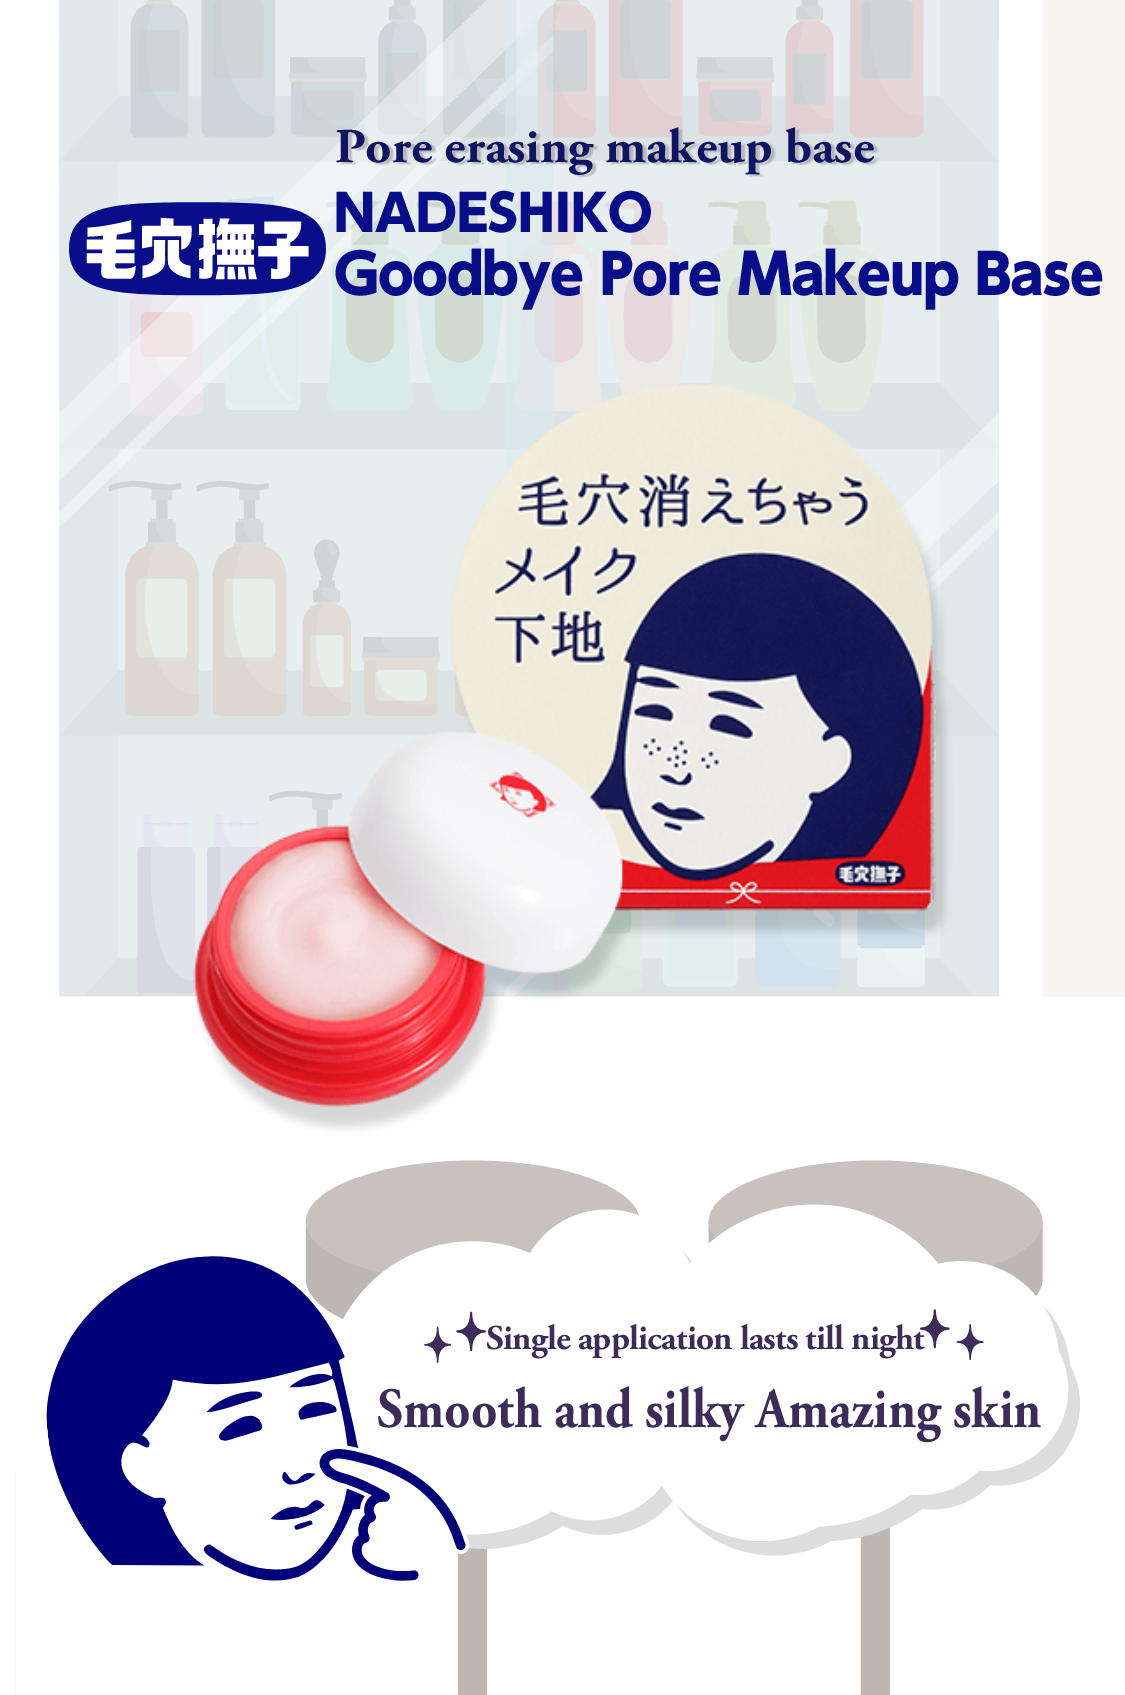 NADESHIKO Goodbye Pore Makeup Base